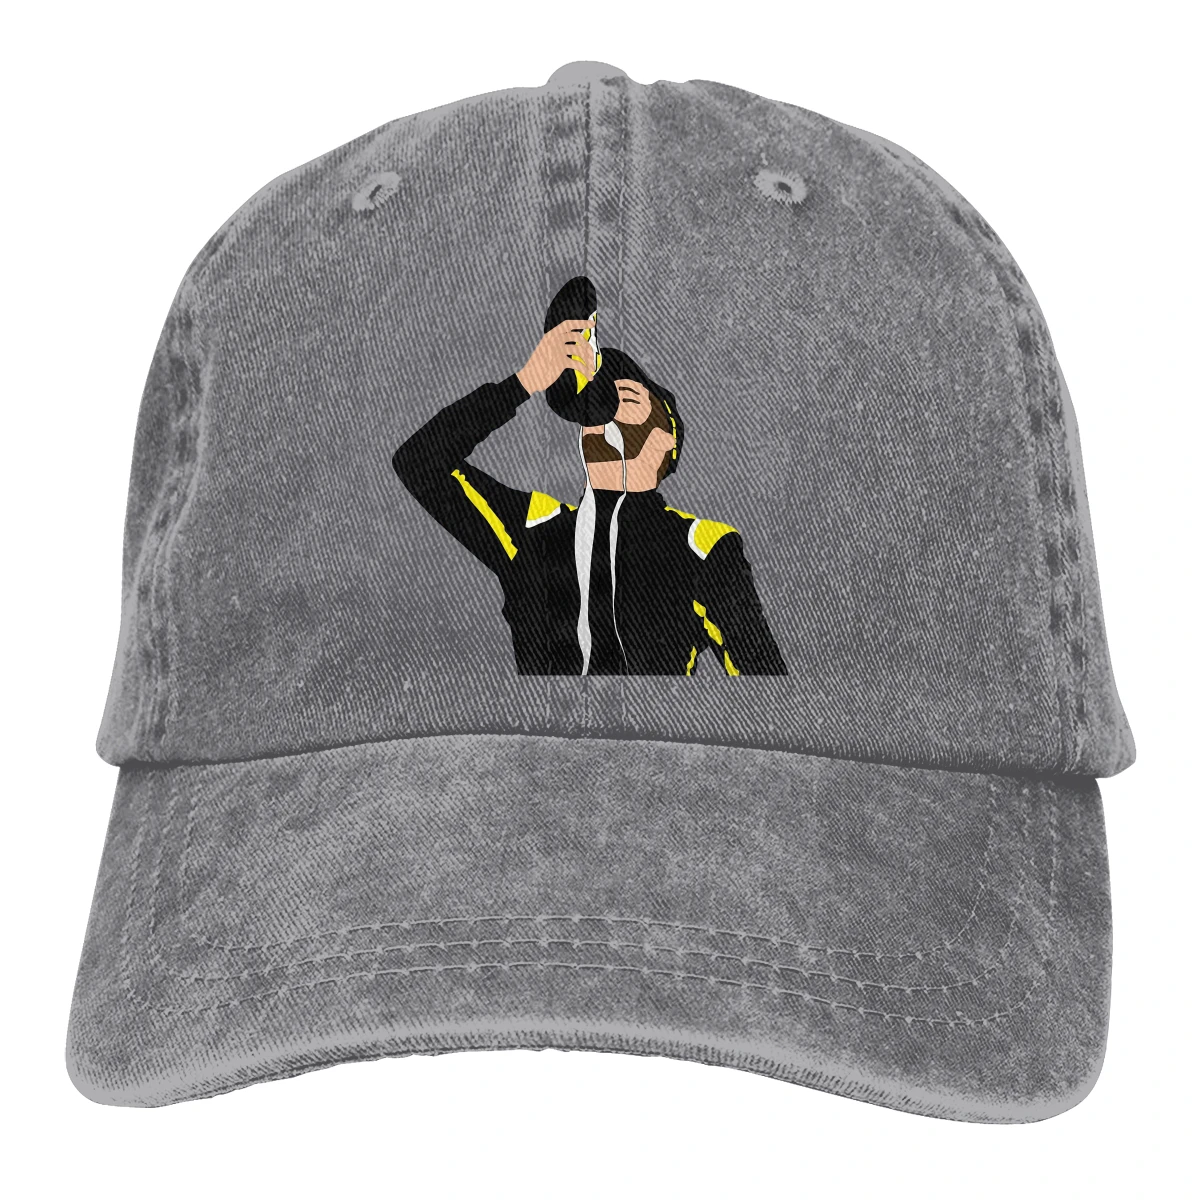 Personalised Embroidered Baseball Cap Grand Prix Racing Custom Printed Hat Unise